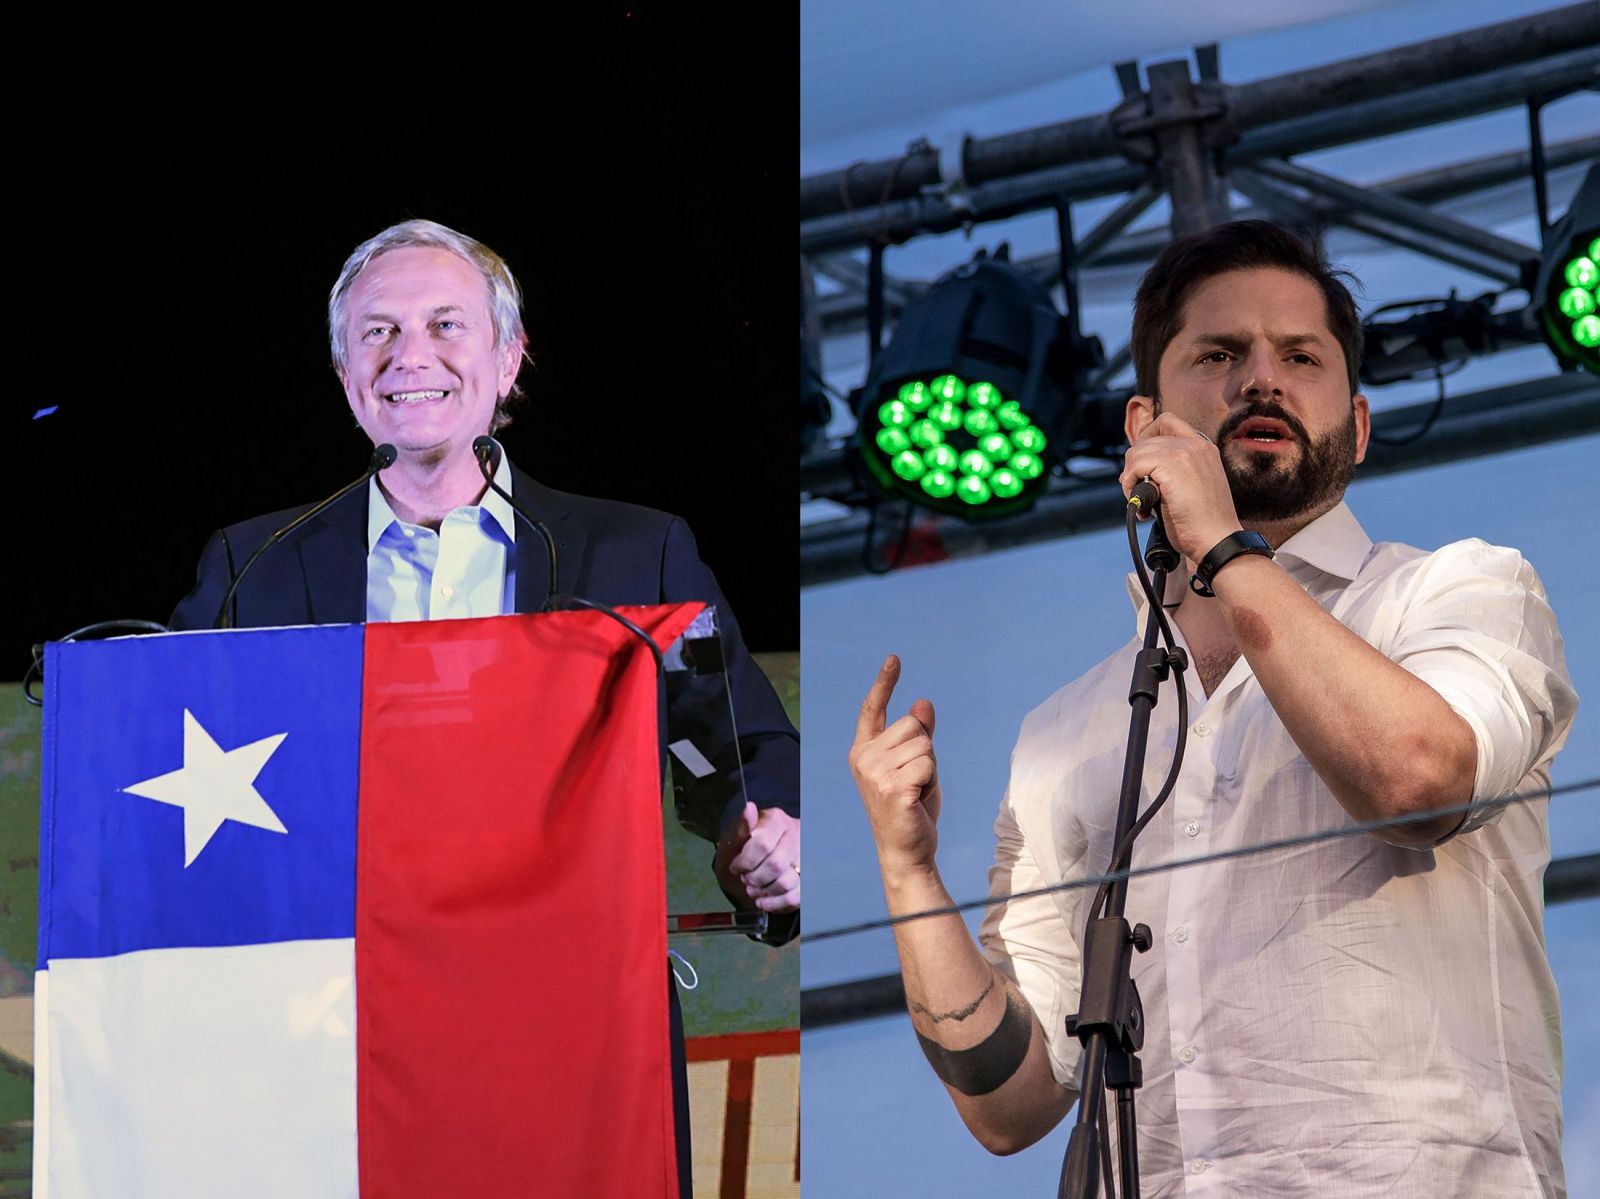 Encuesta revela la fuerte disputa por la presidencia de Chile. El país esta polarizado 